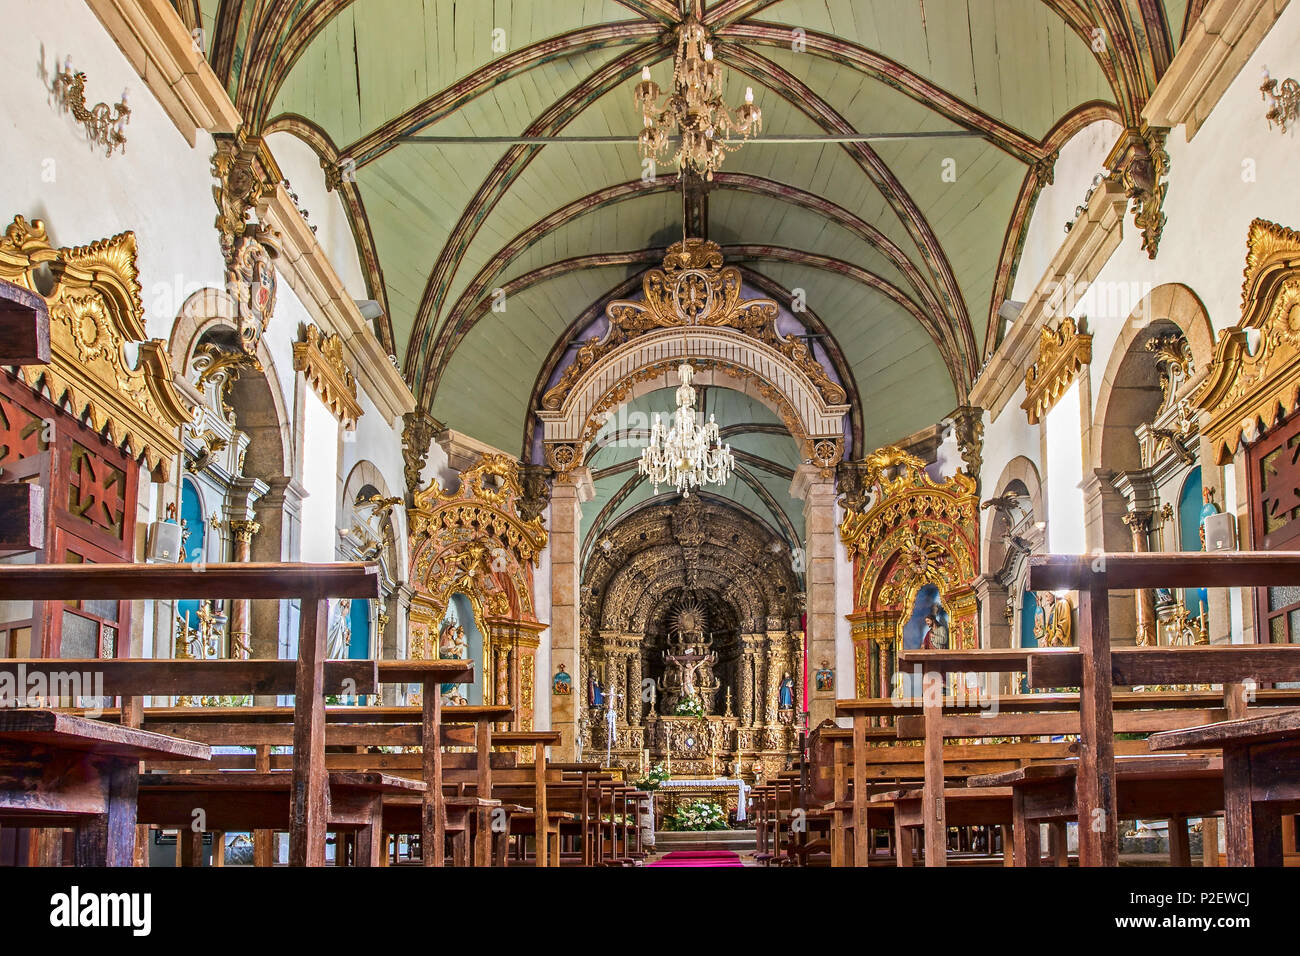 Interior of Igreja Matriz de Sabrosa - church in the center of a small village of Sabrosa, Portugal. Stock Photo